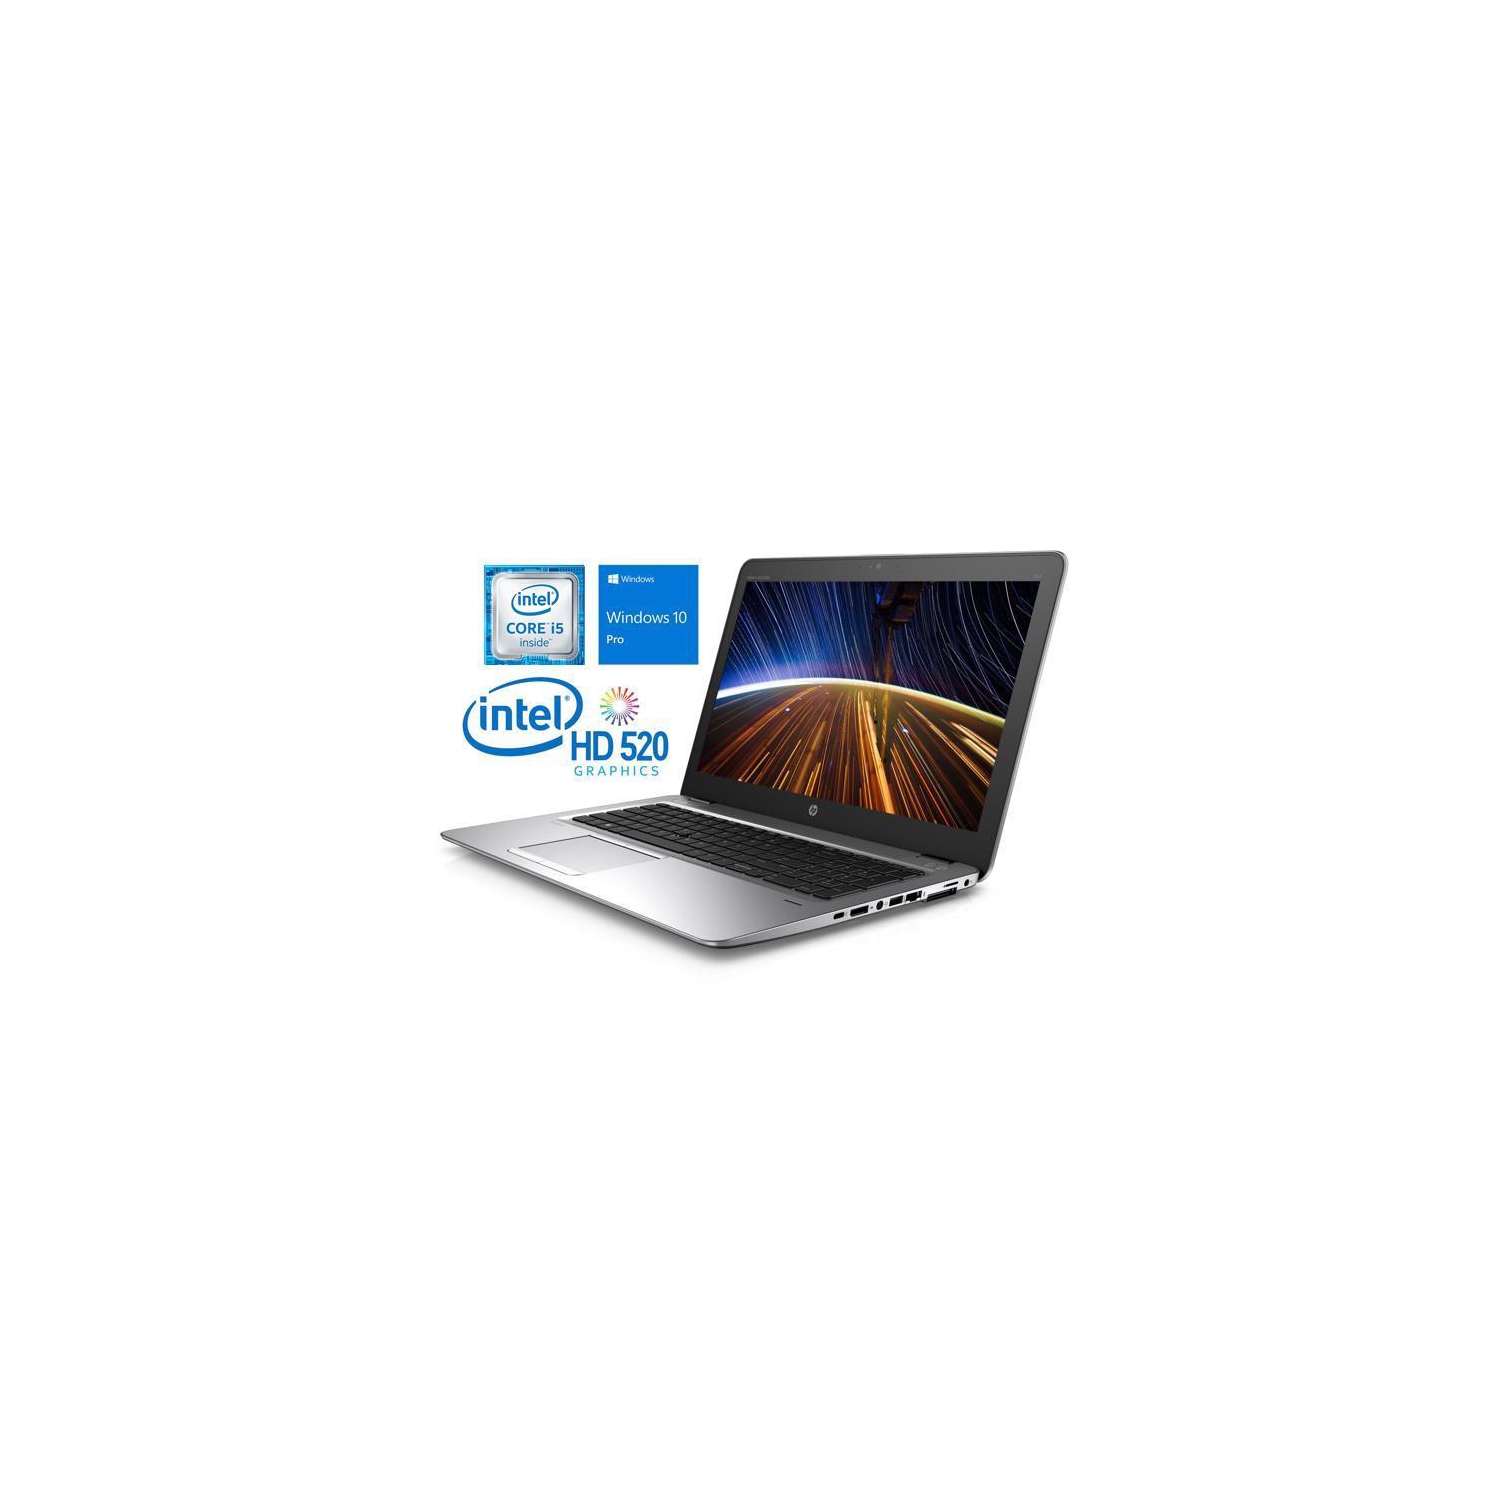 HP EliteBook 850 G3 15.6" Laptop - 6th Gen Intel Core i5-6300U, 16GB DDR4 RAM, 500GB HDD, Windows 10 Pro - REFURBISHED